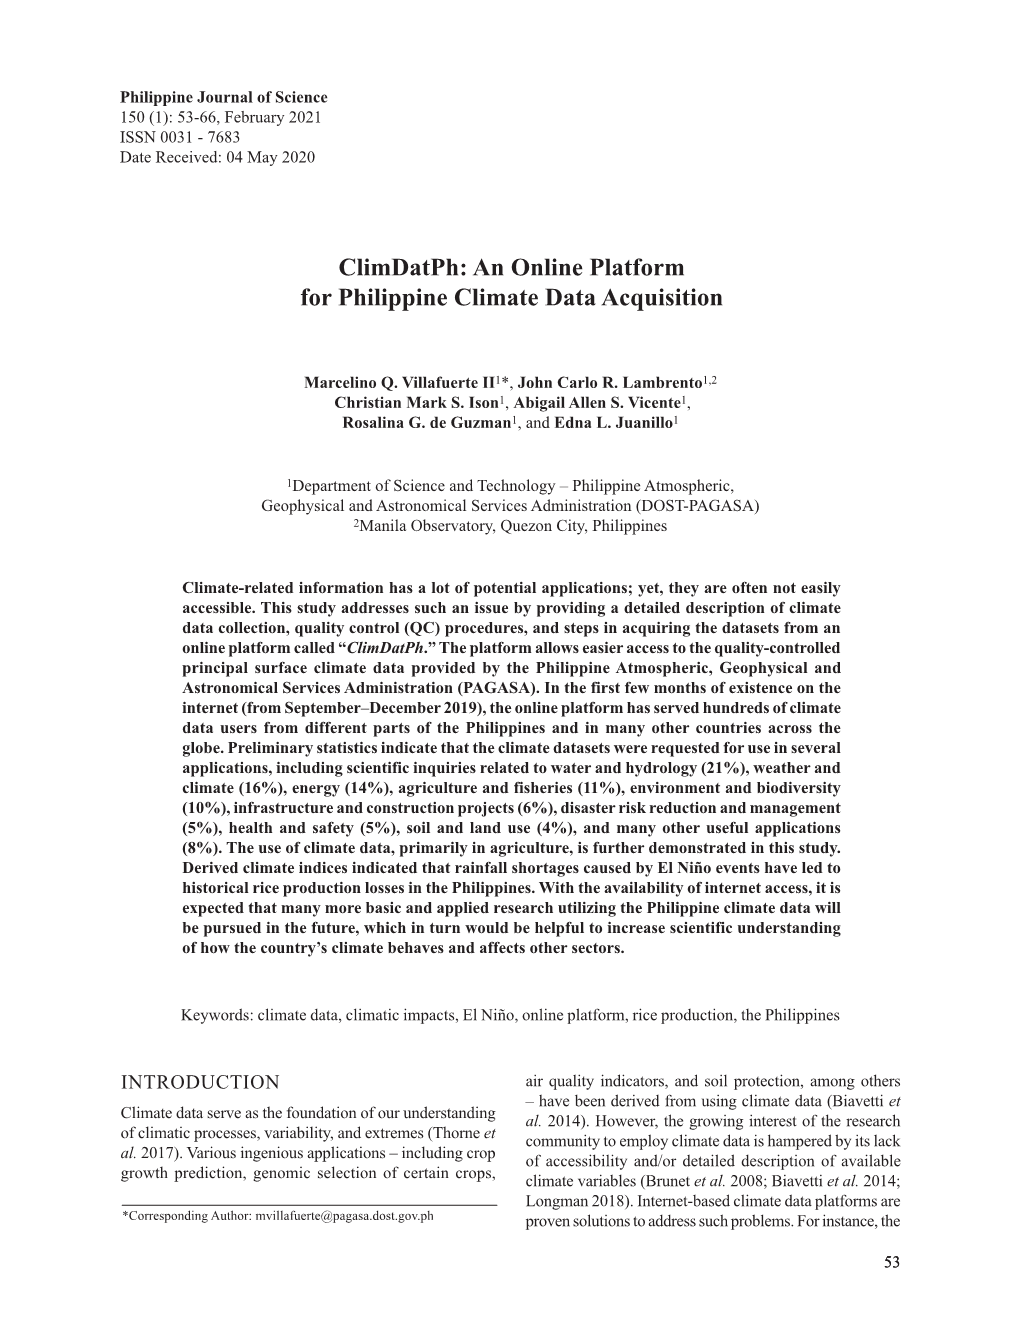 Climdatph: an Online Platform for Philippine Climate Data Acquisition